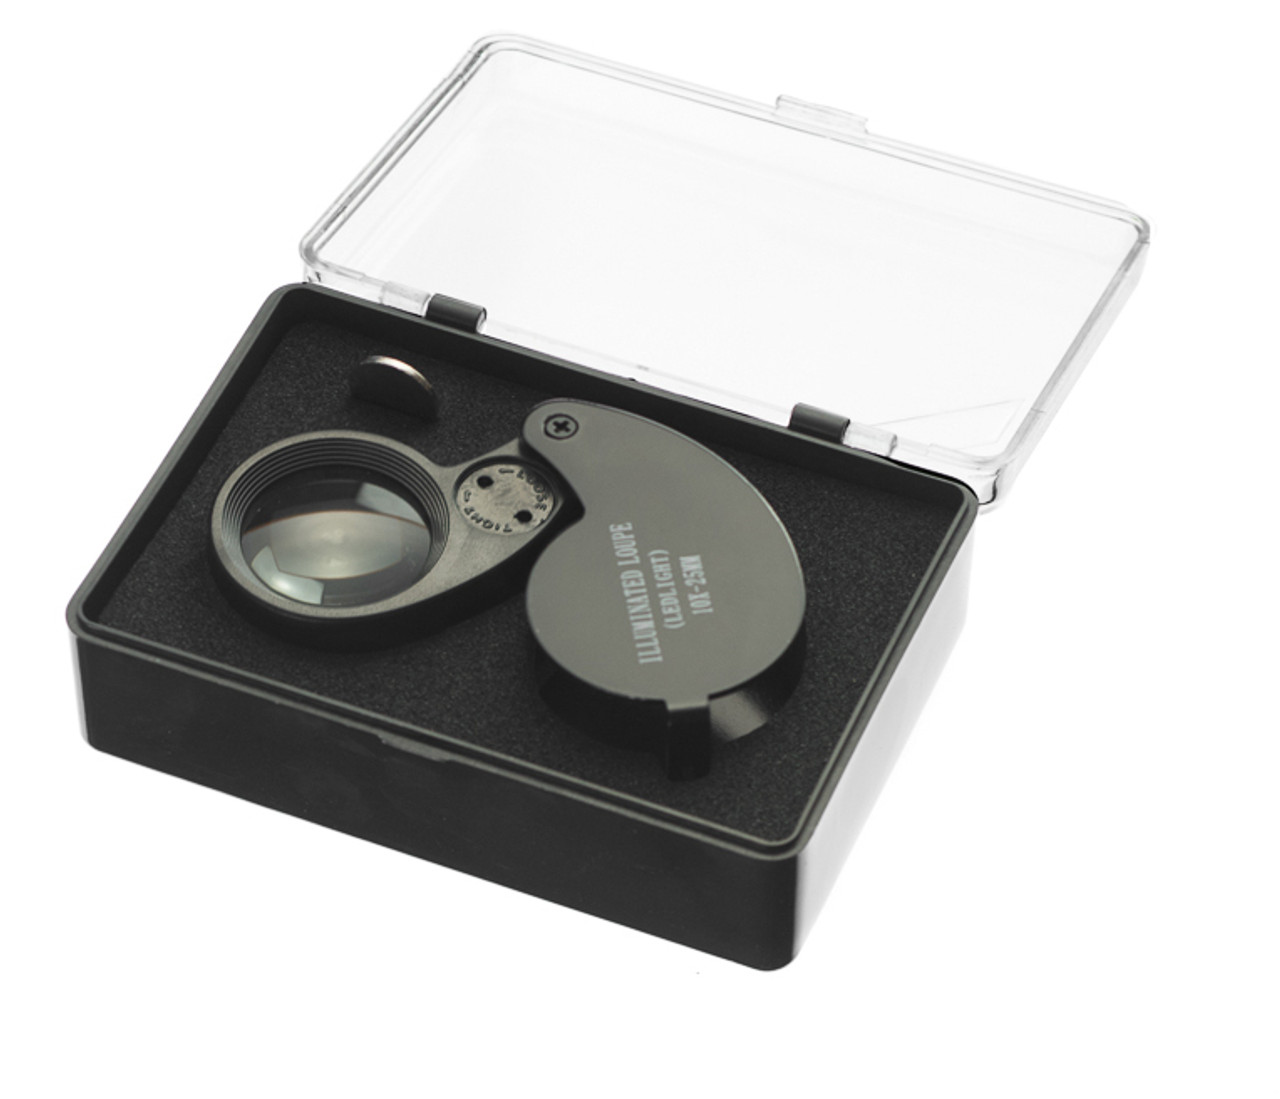 10x, LED & UV light Jewelers Loupe Large 25mm Doublet Lens ideal